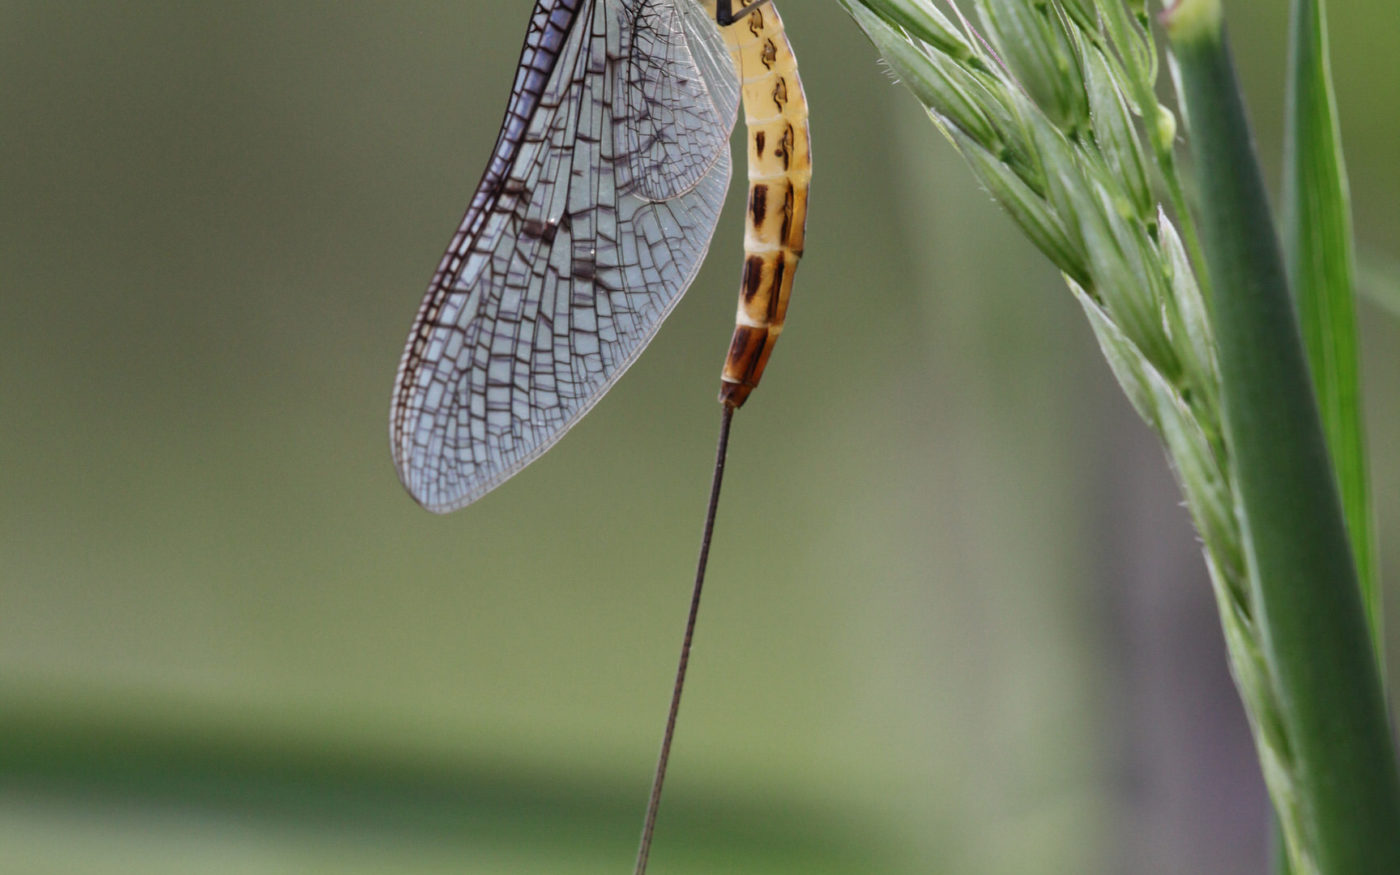 Mayfly on grass head